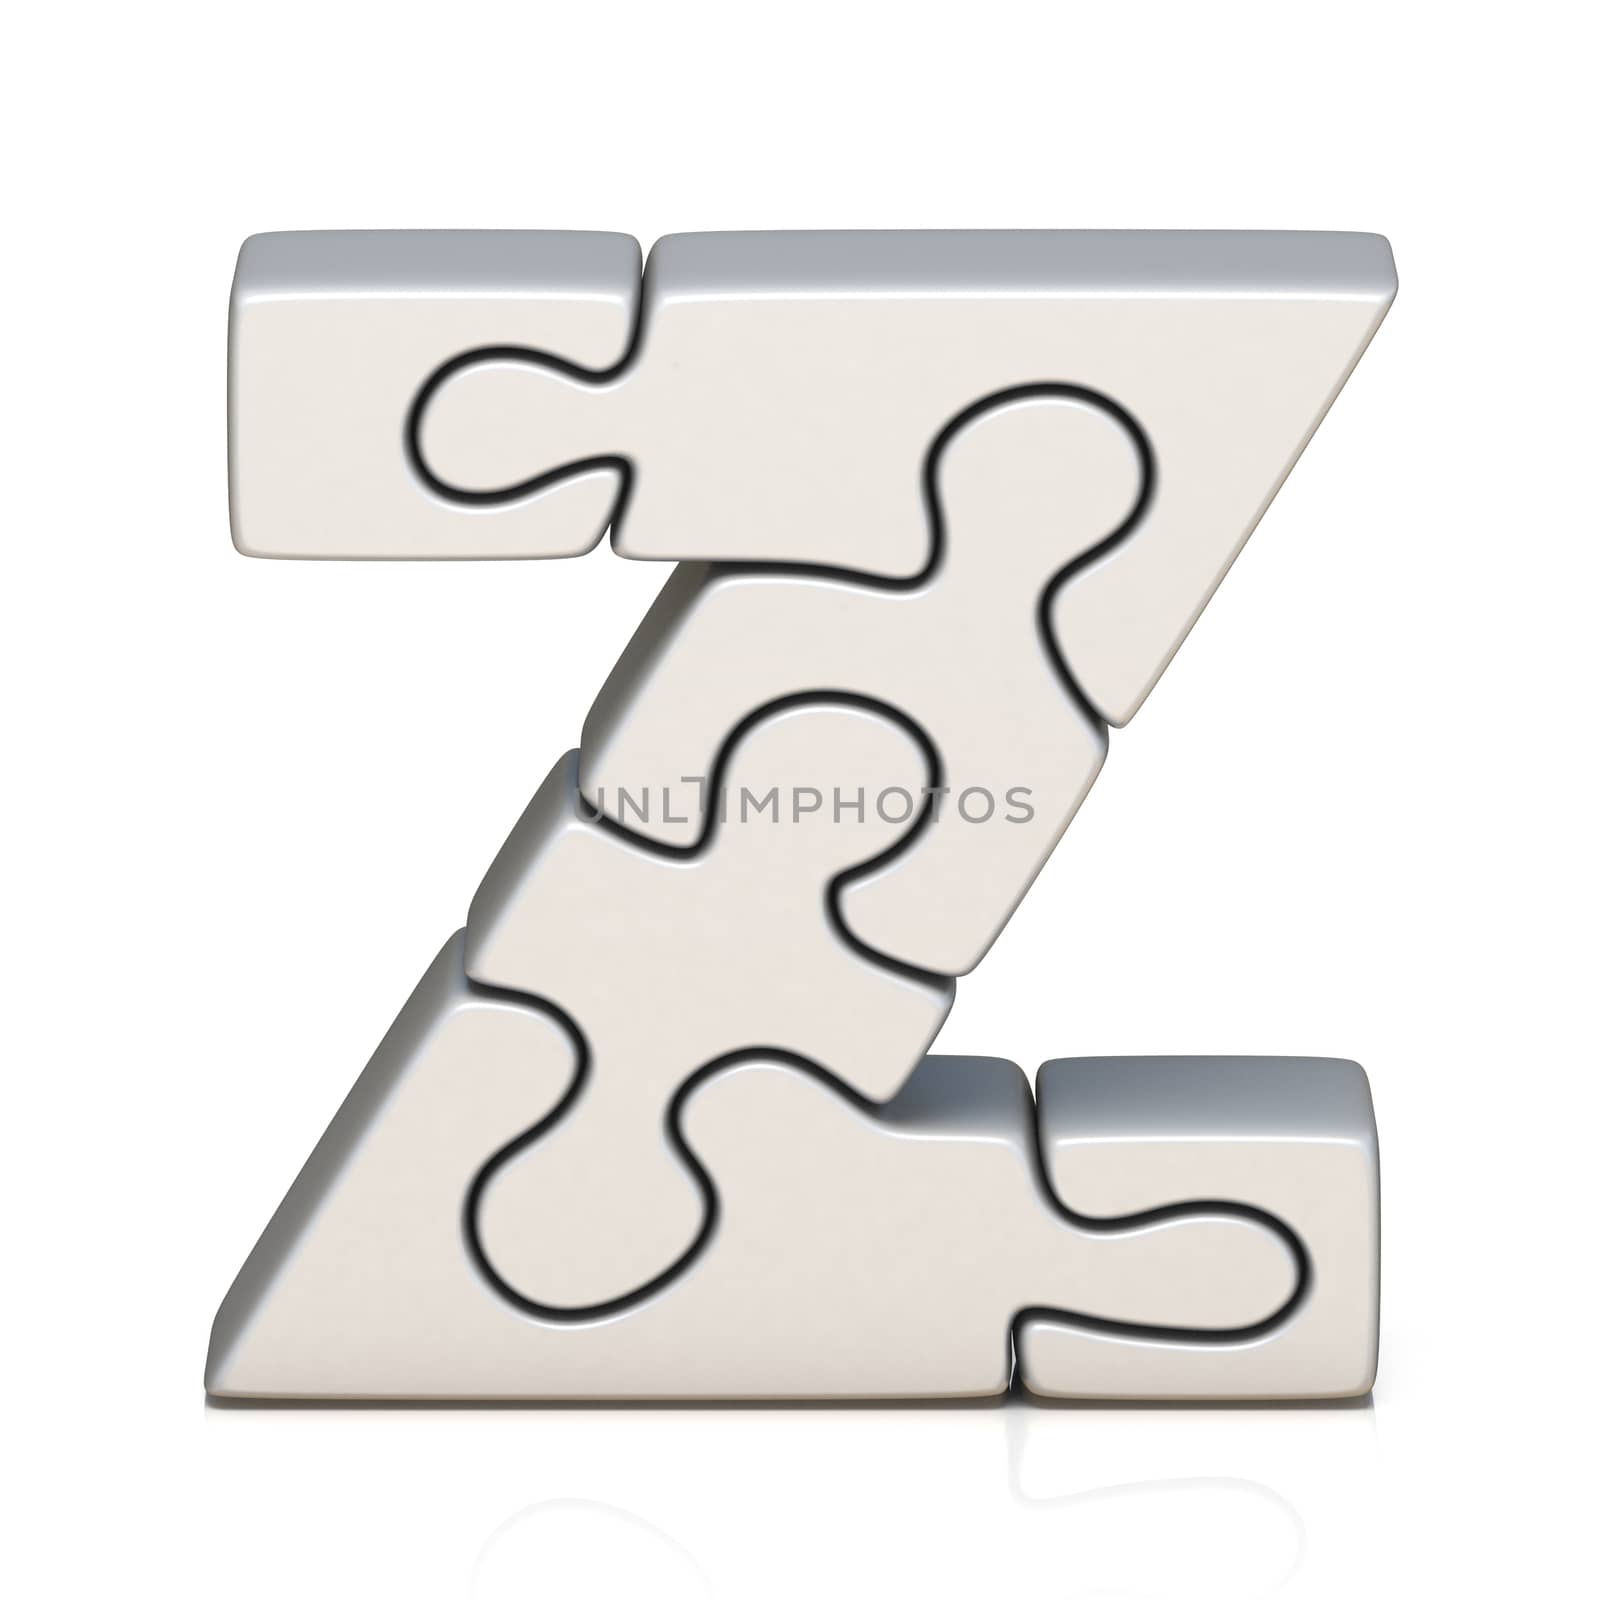 White puzzle jigsaw letter Z 3D render illustration isolated on white background